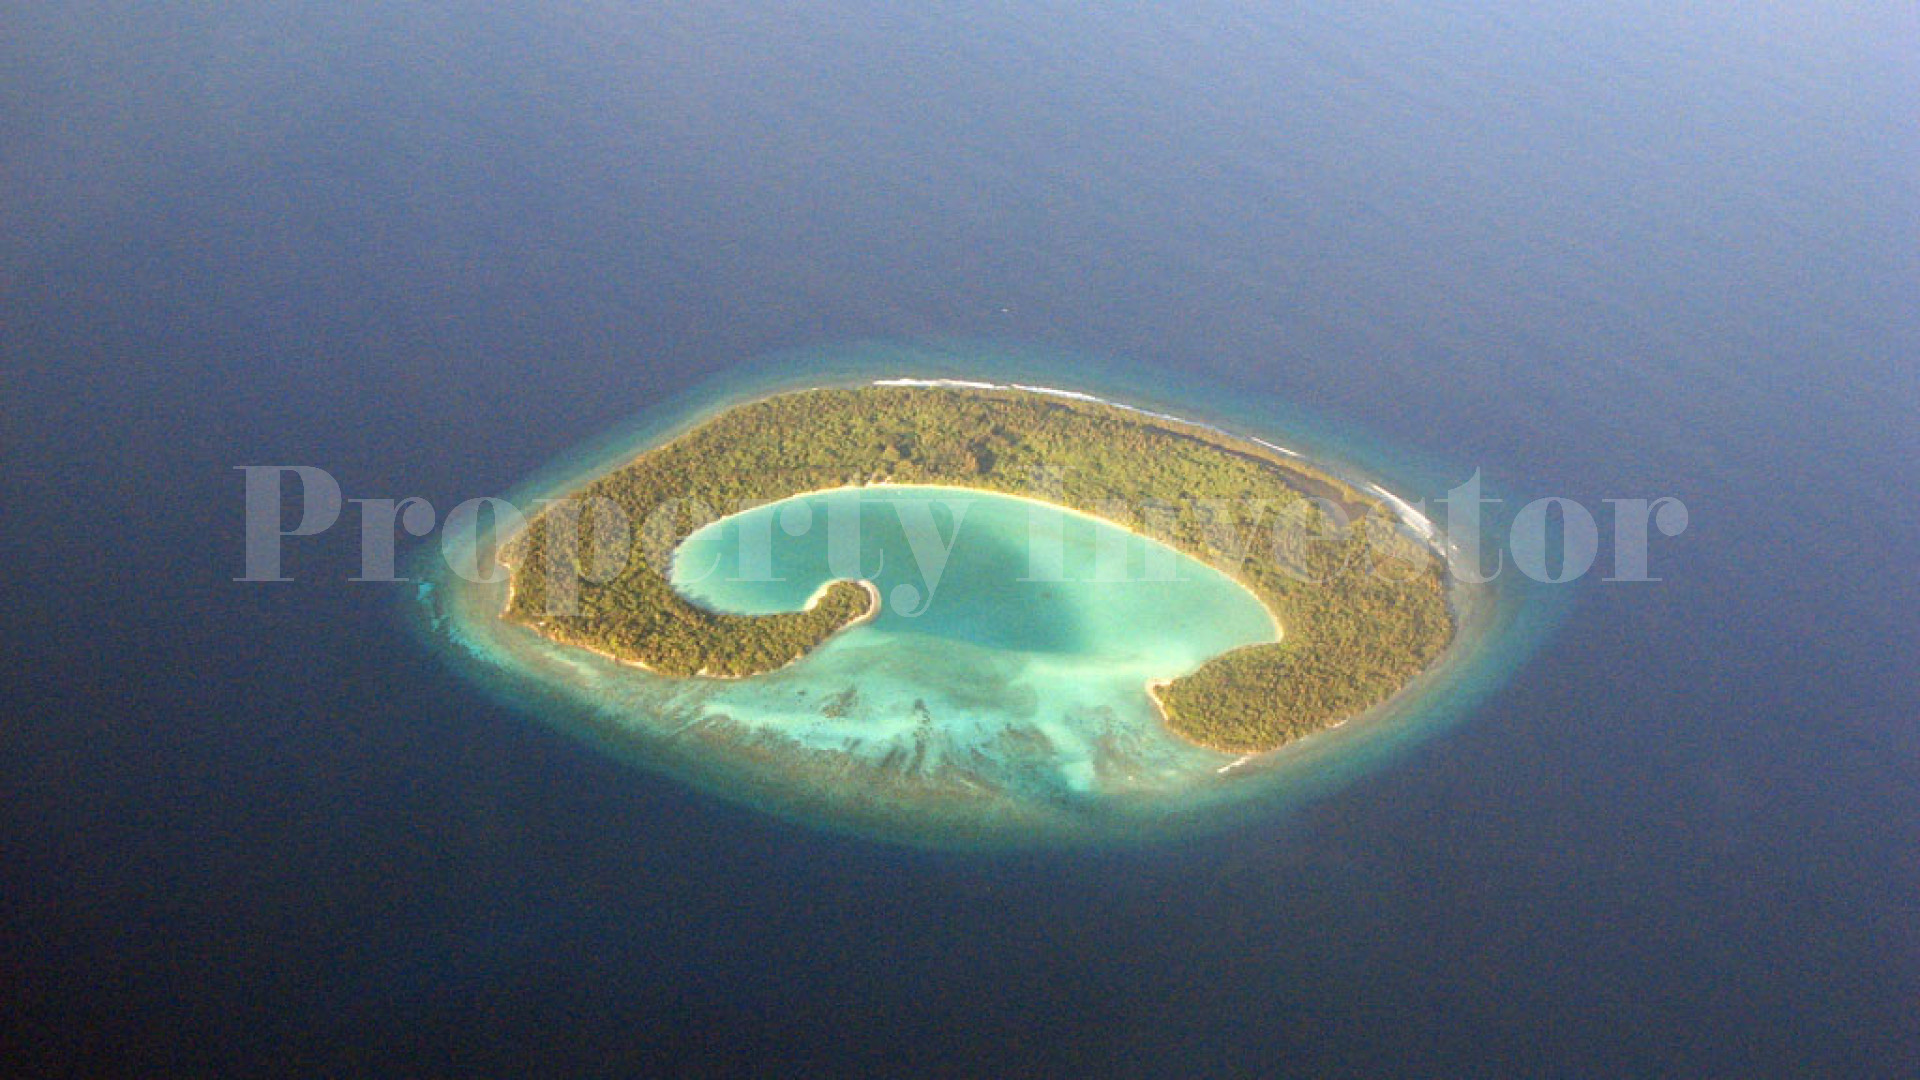 Unique 65 Hectare Private Virgin Island for Agricultural Development for Sale in the Maldives